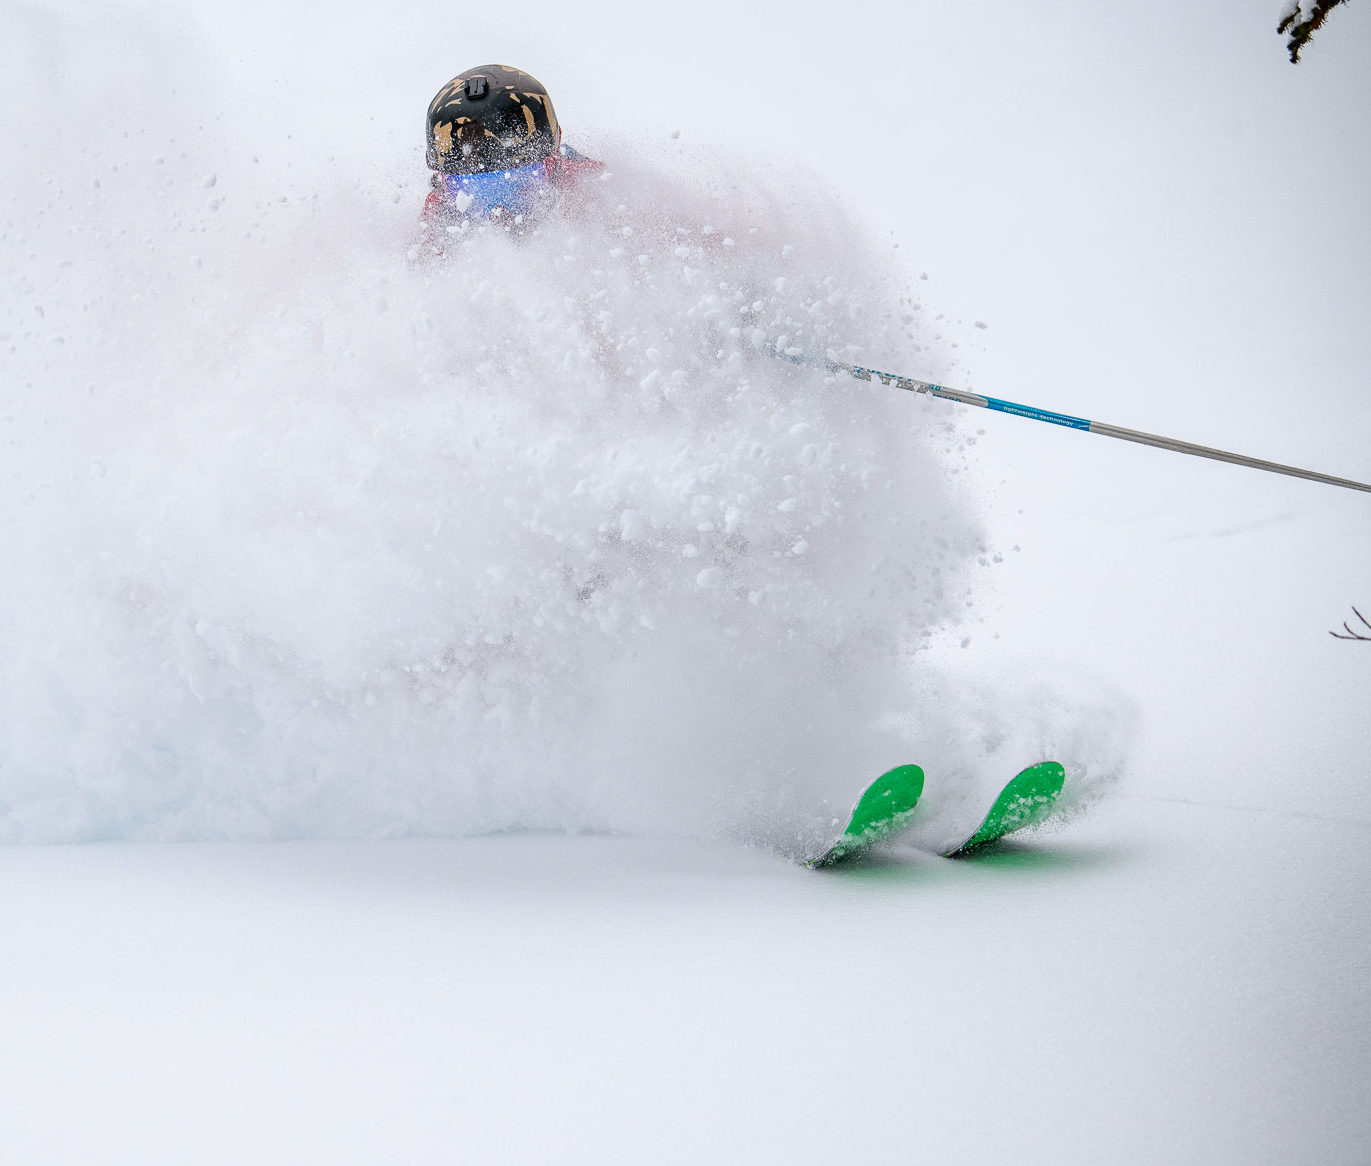 Skier riding in powder.